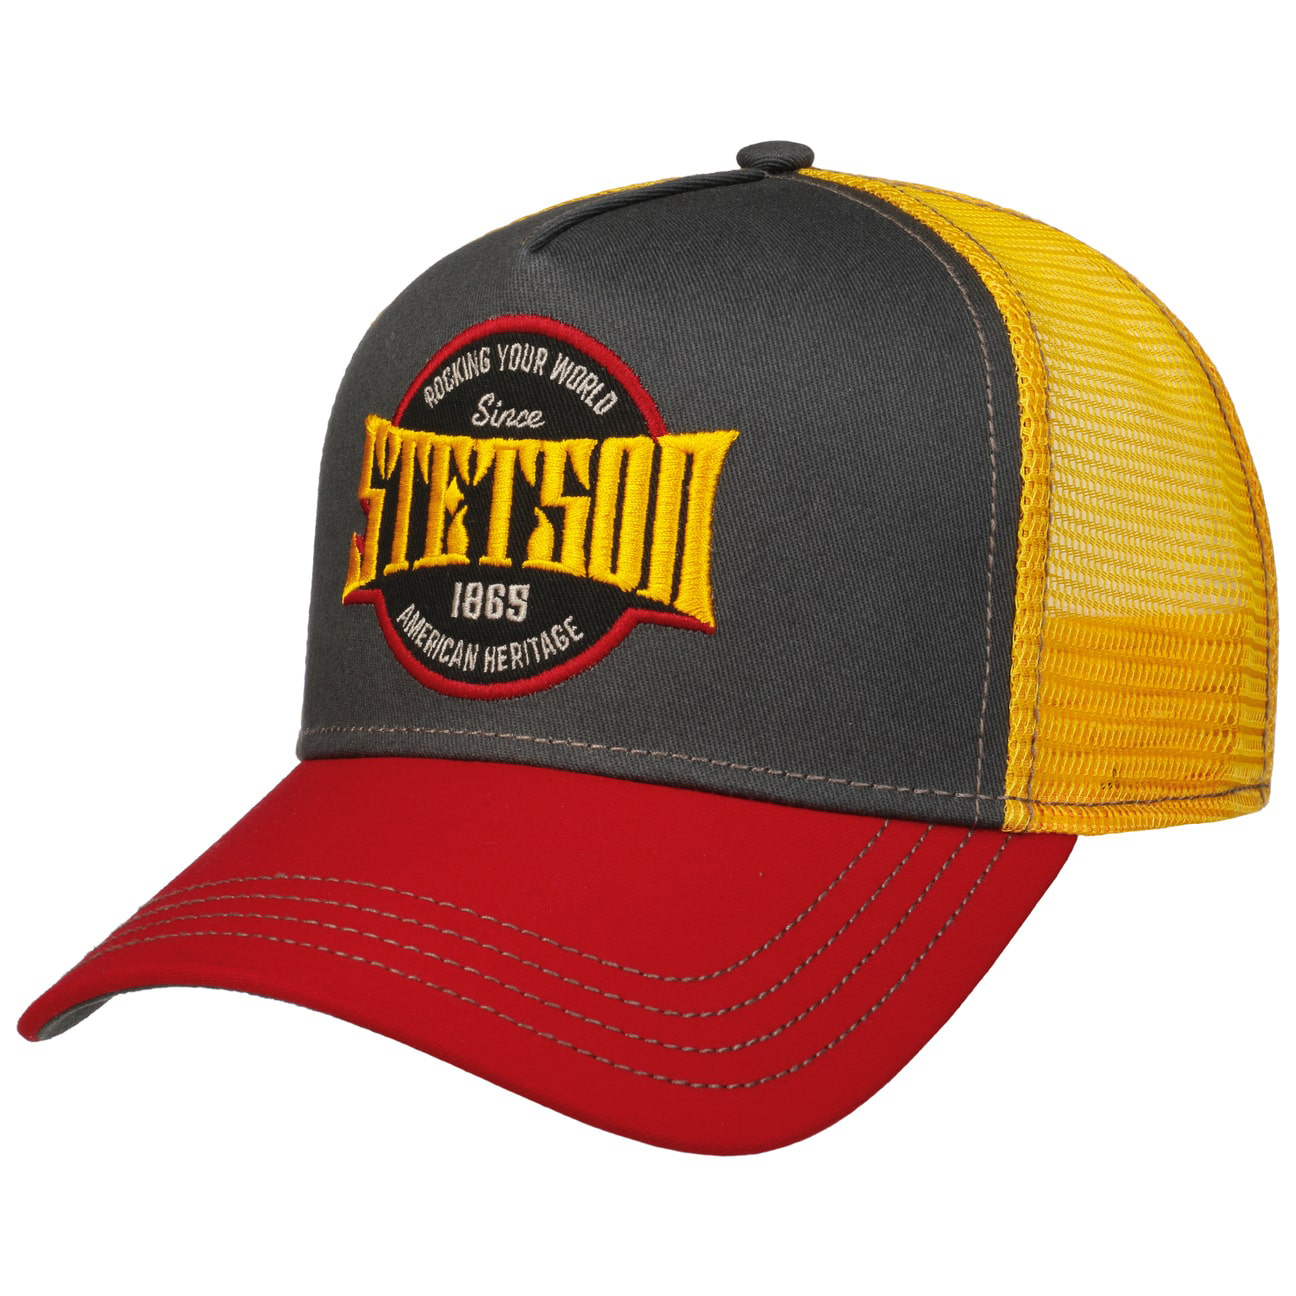 Stetson - Rocking Your World Trucker Cap - Yellow